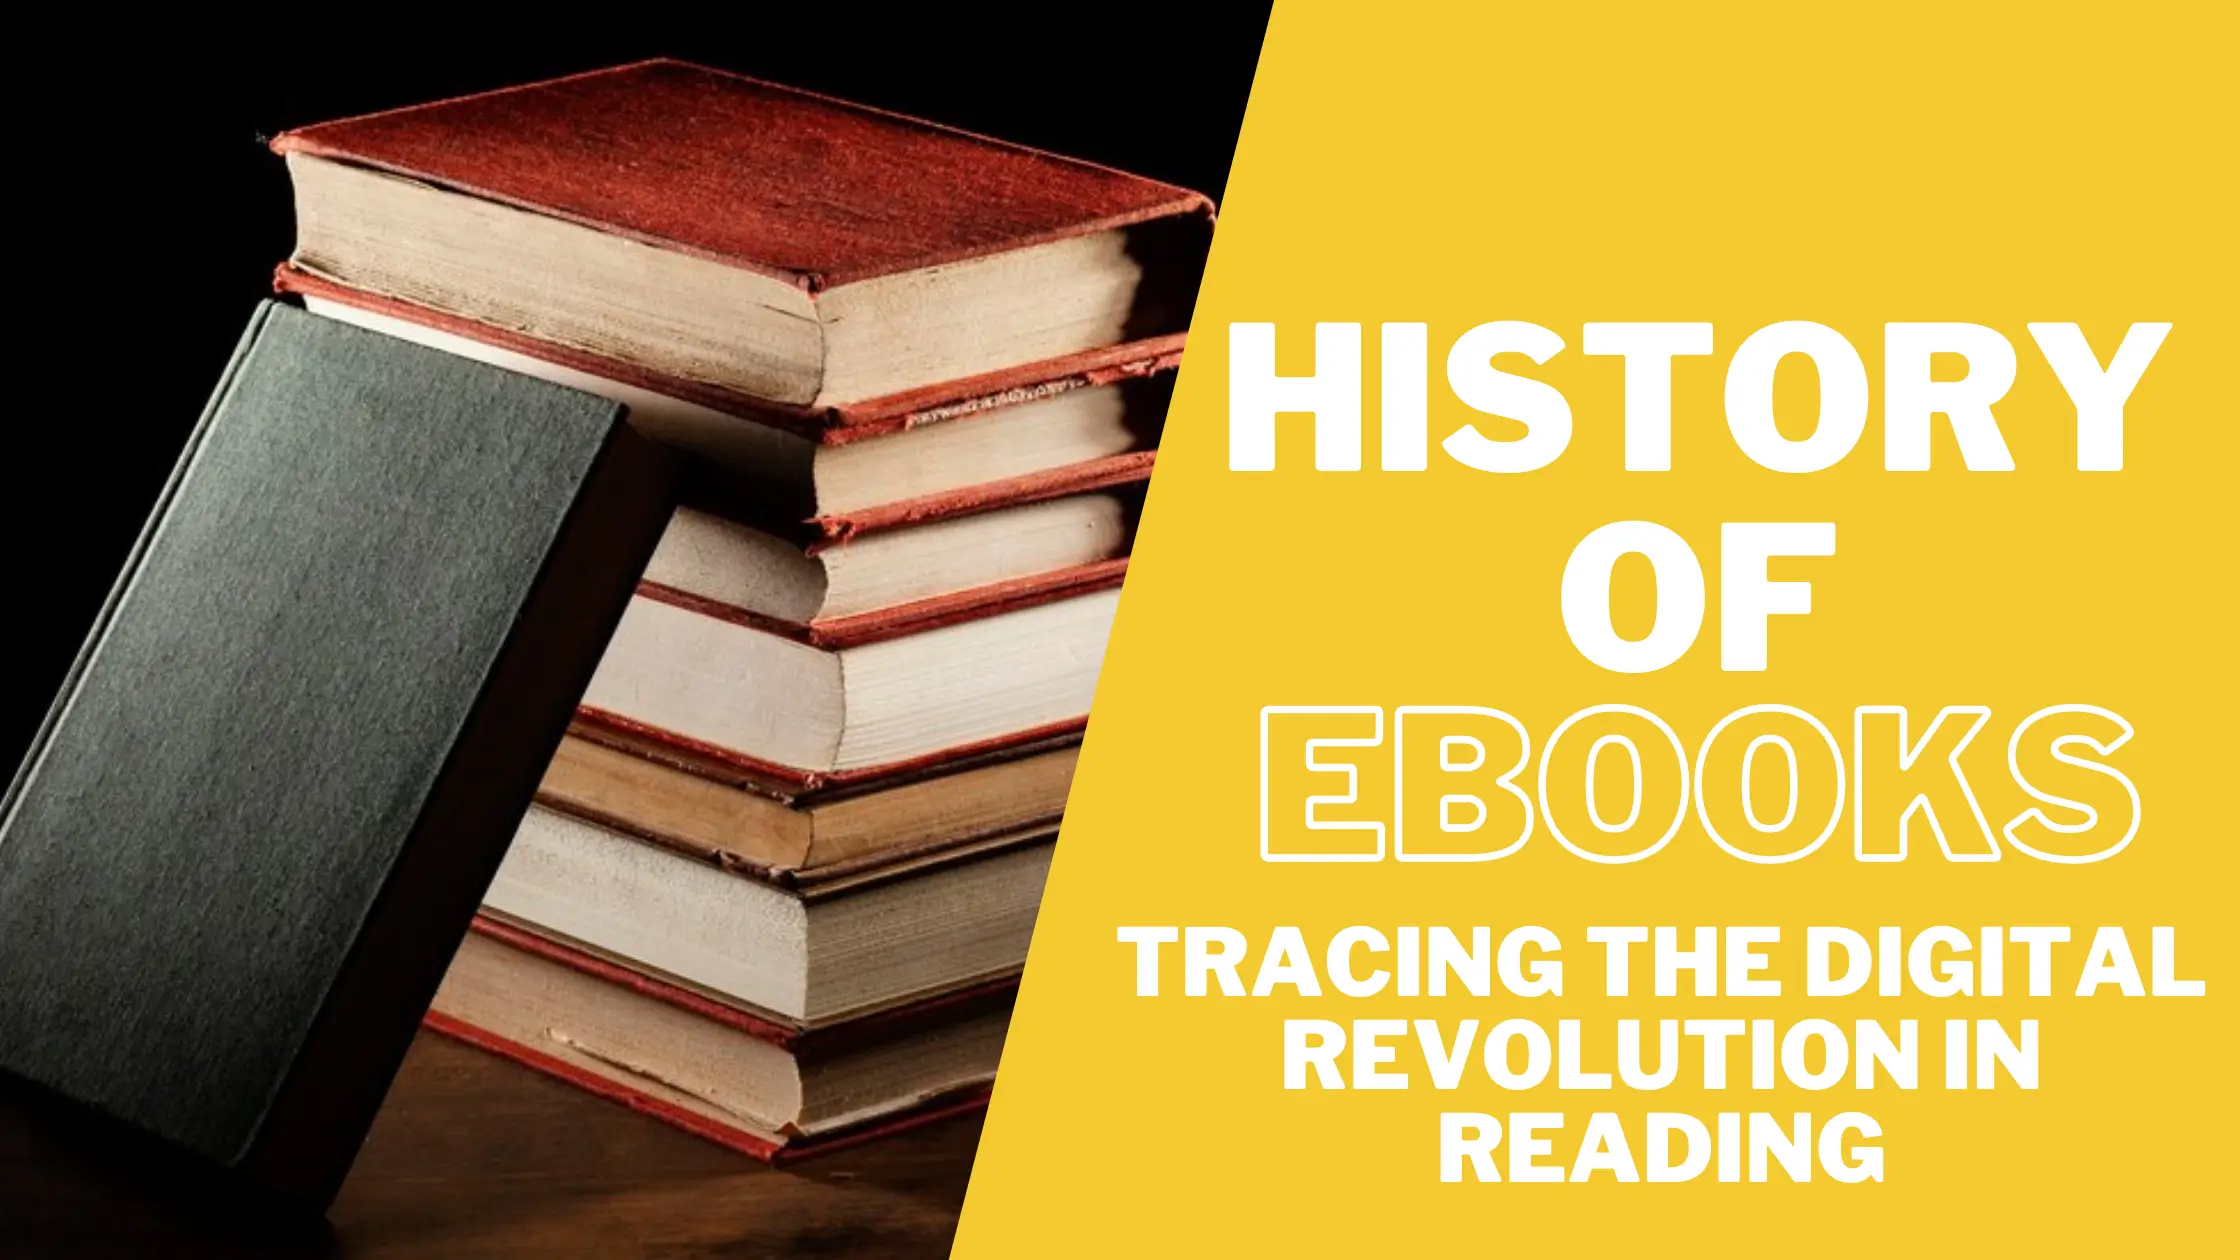 HISTORY OF EBOOKS